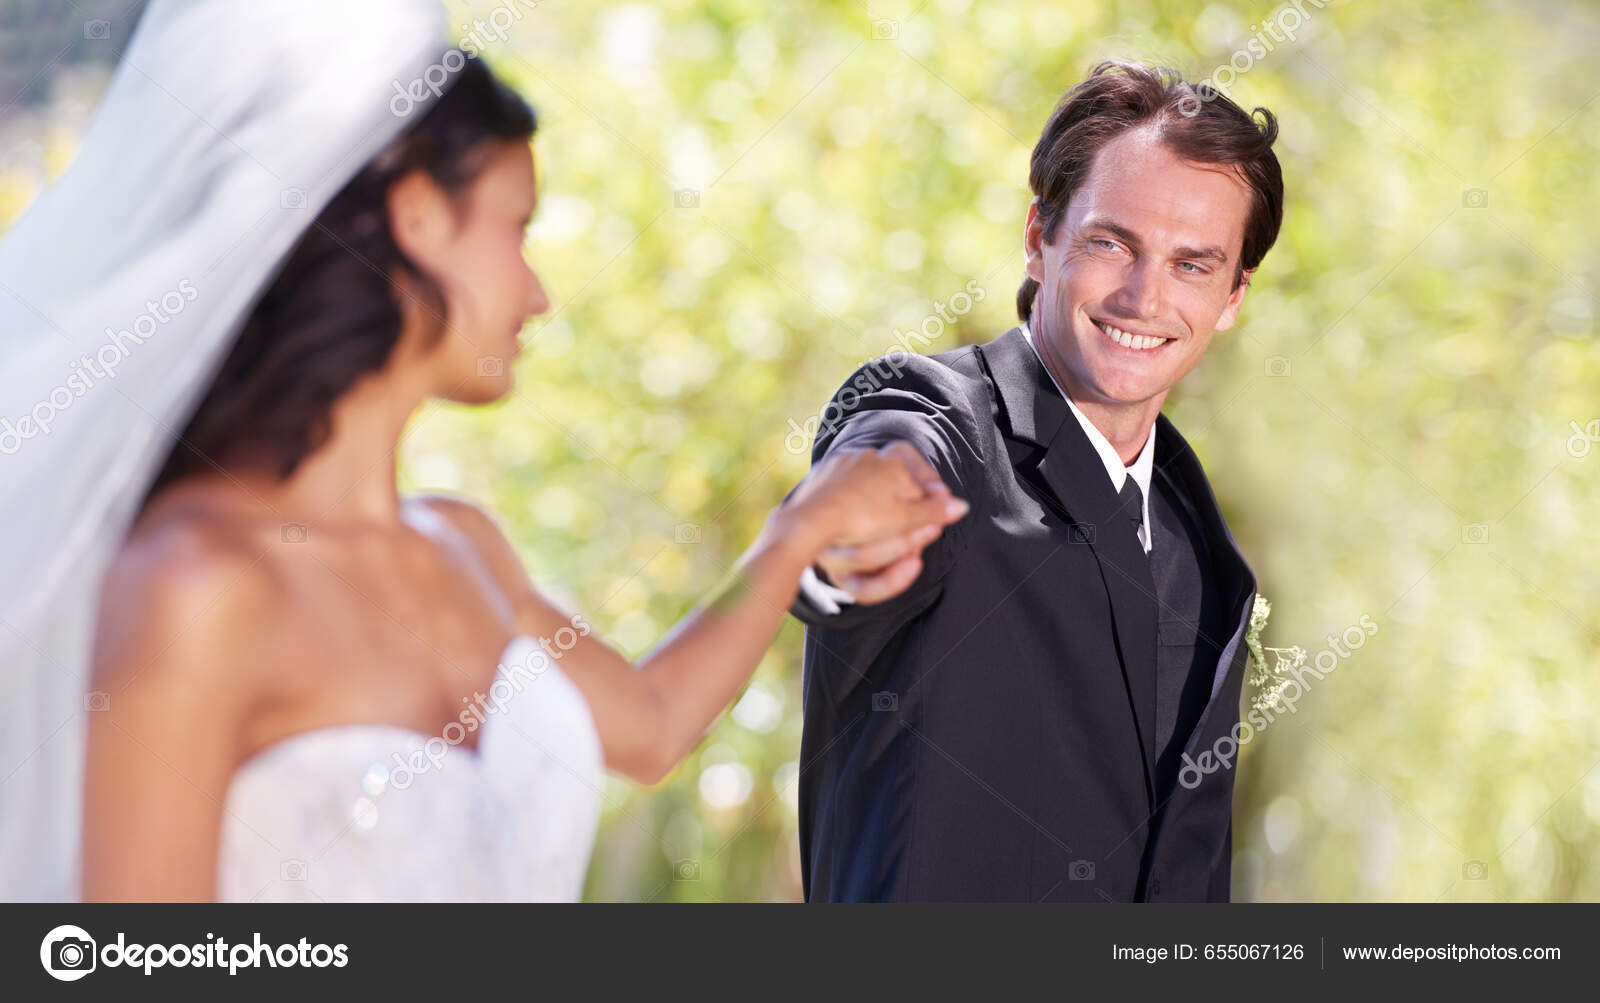 pidiendo matrimonio fotos stock, imágenes de Hombre pidiendo matrimonio royalties |